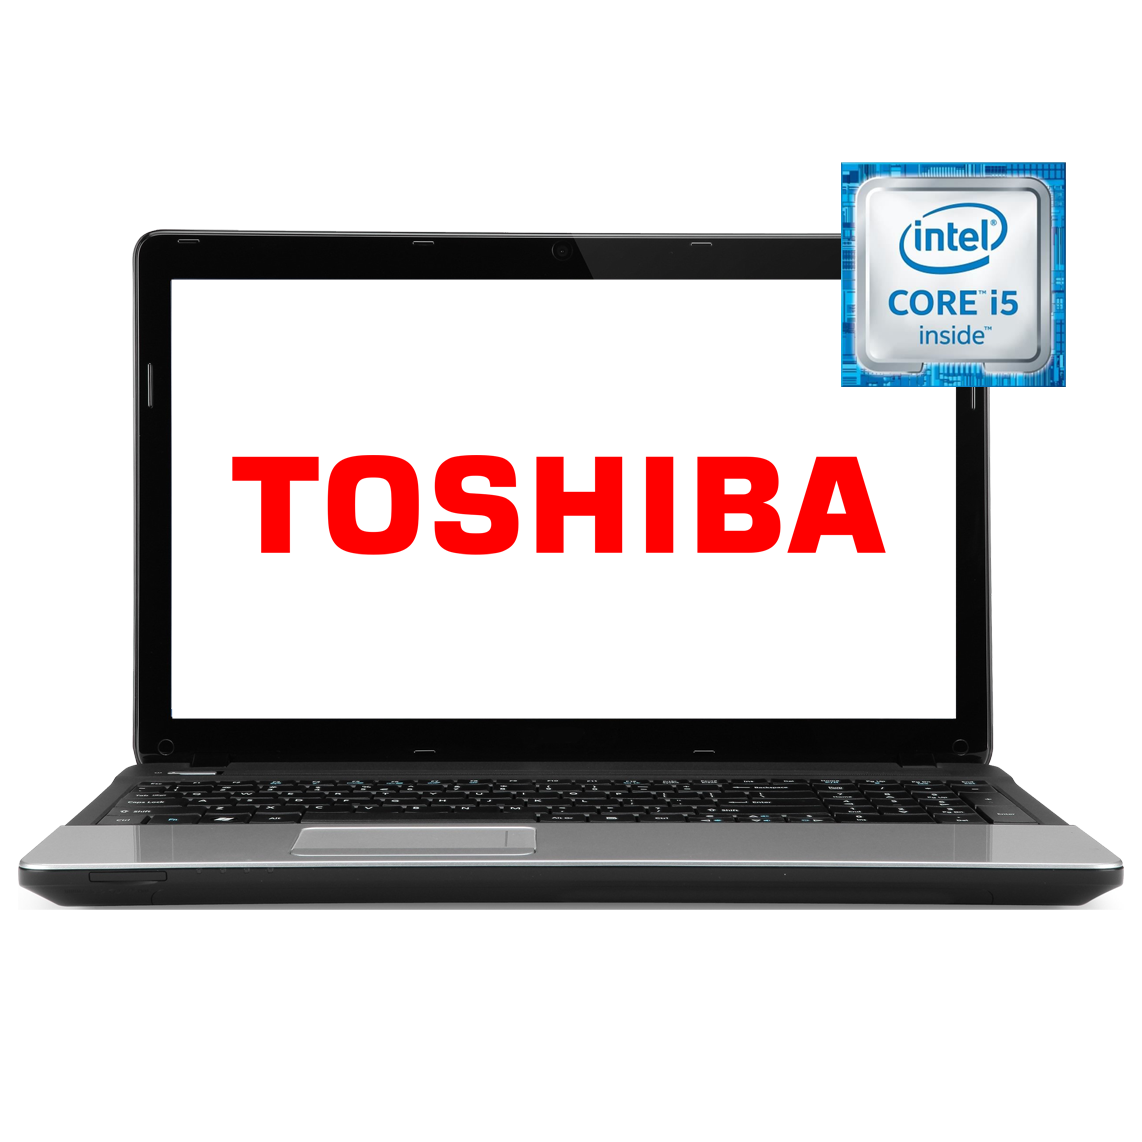 Toshiba - 15 inch Core i5 3rd Gen